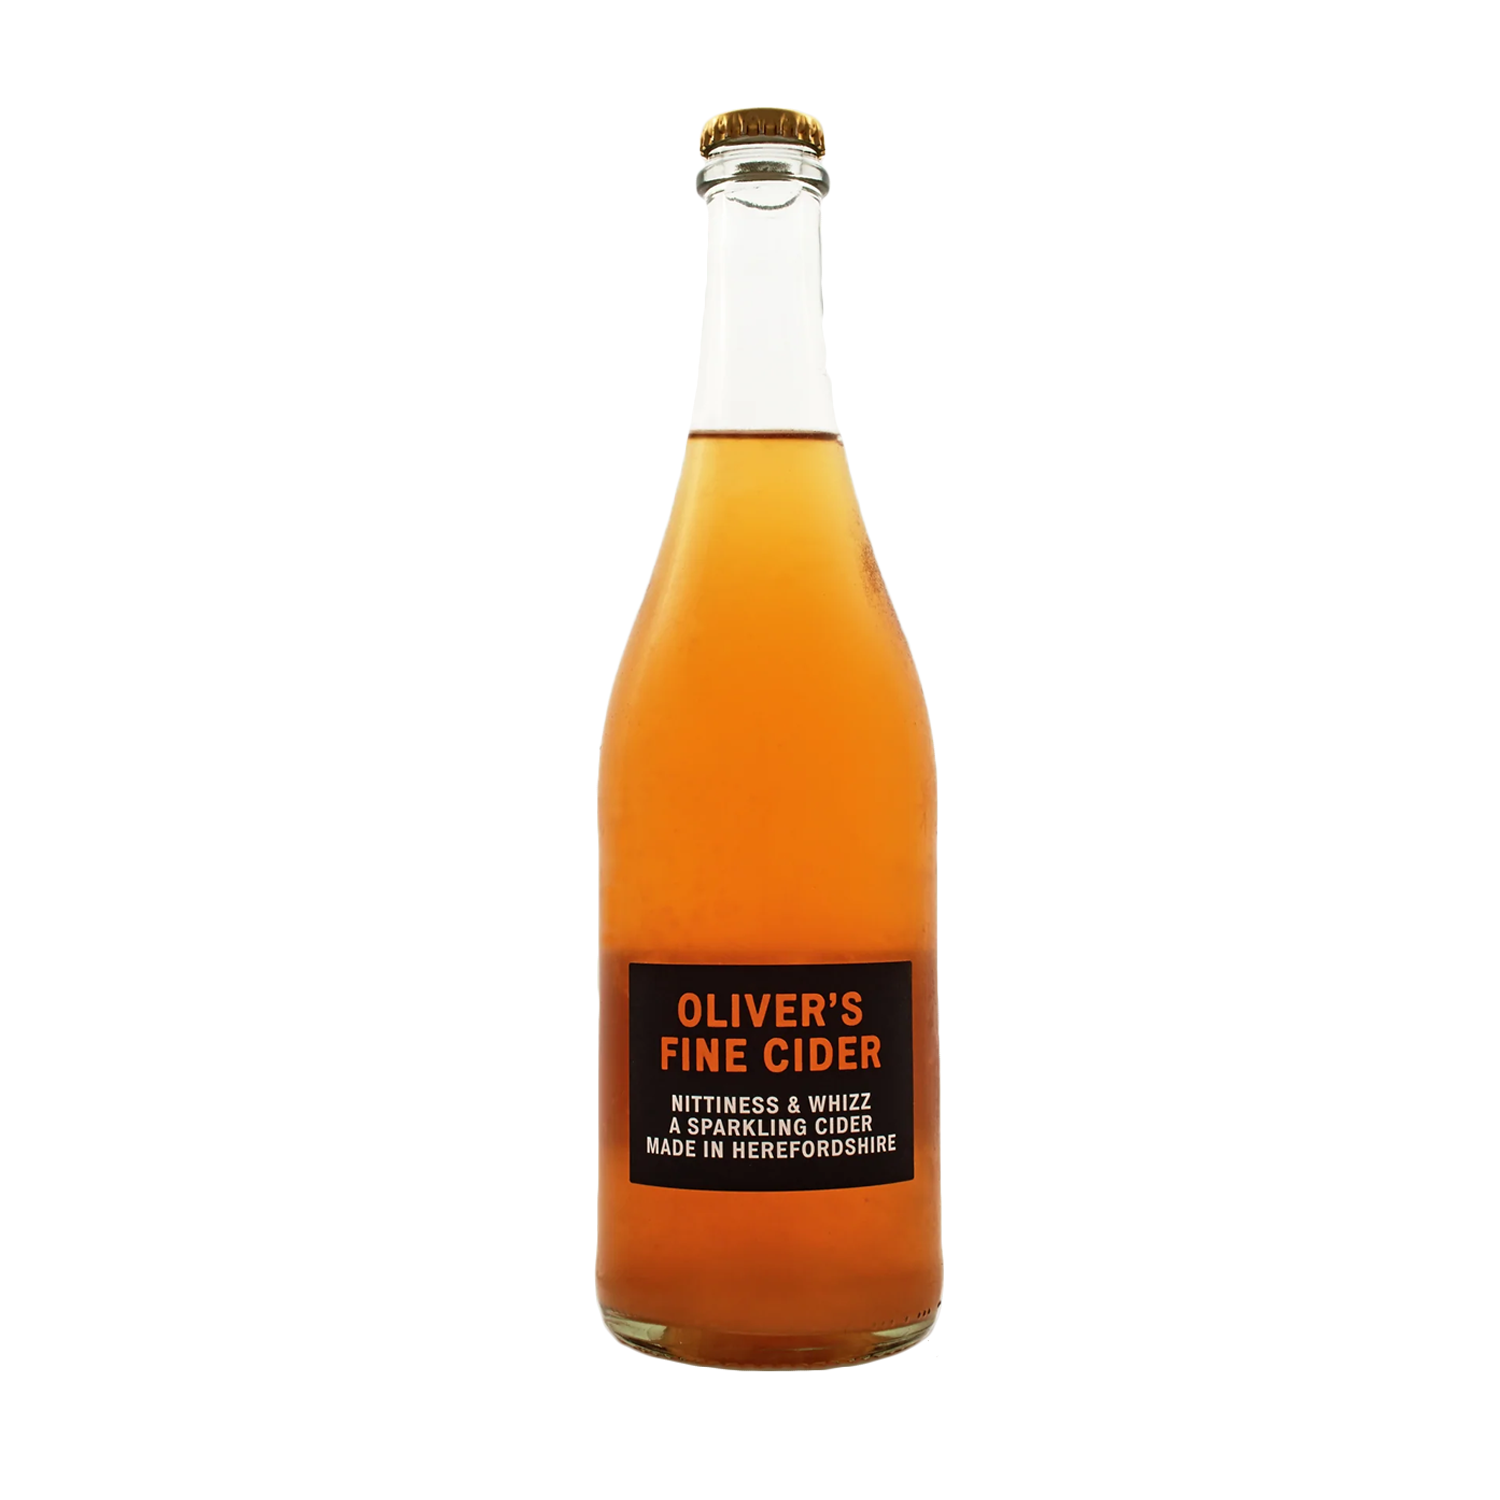 Oliver's Nittiness & Whizz 2020 Cider